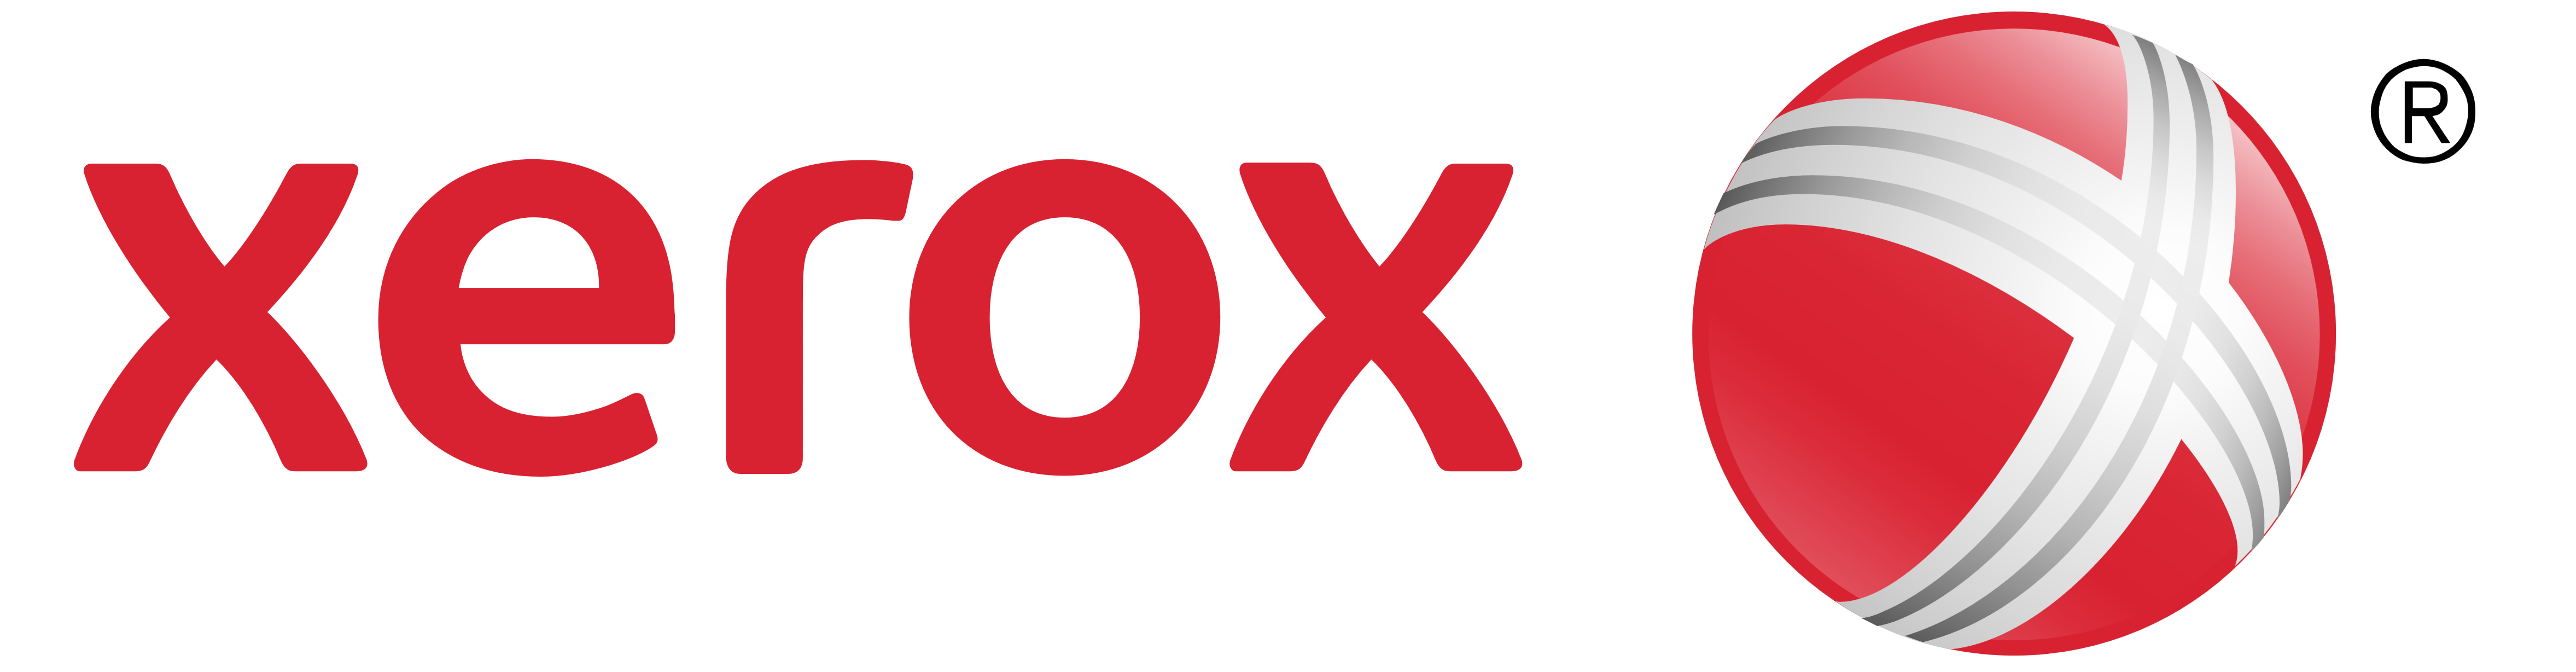 Xerox Logo PNG Transparent Xerox Logo.PNG Images..